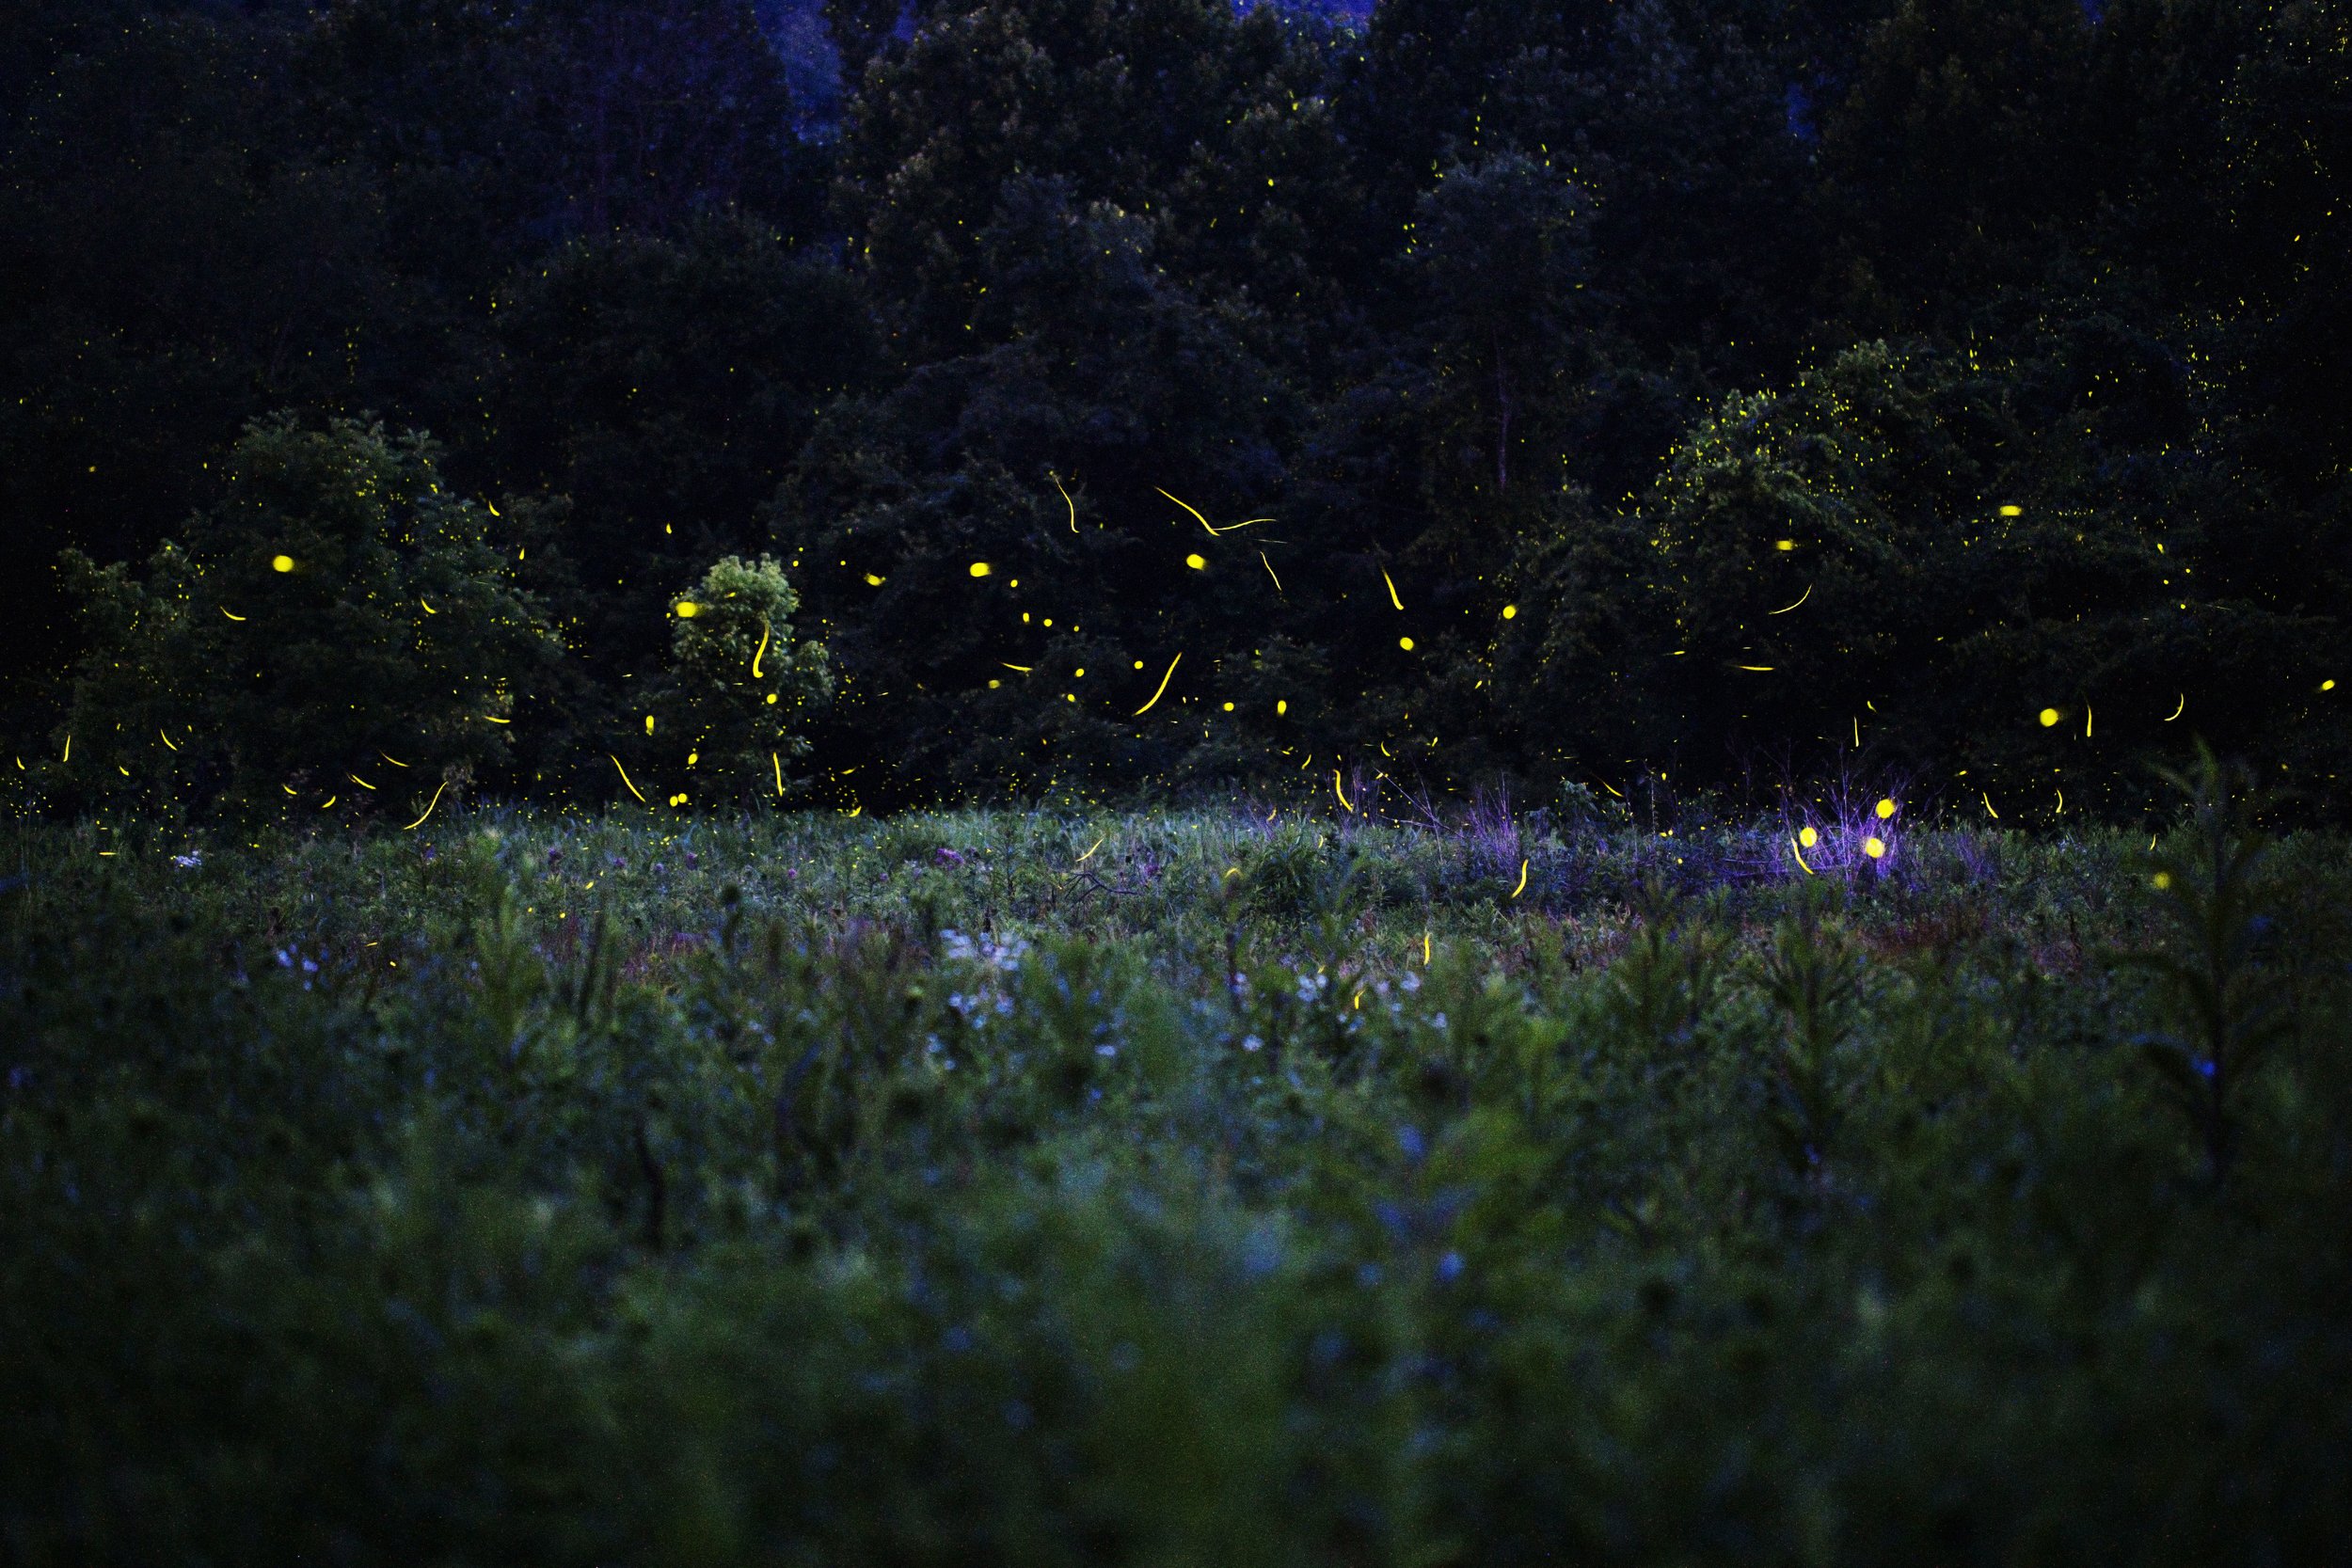   Photinus  and  Photuris  fireflies at dusk, Appalachian Ohio, 2019 